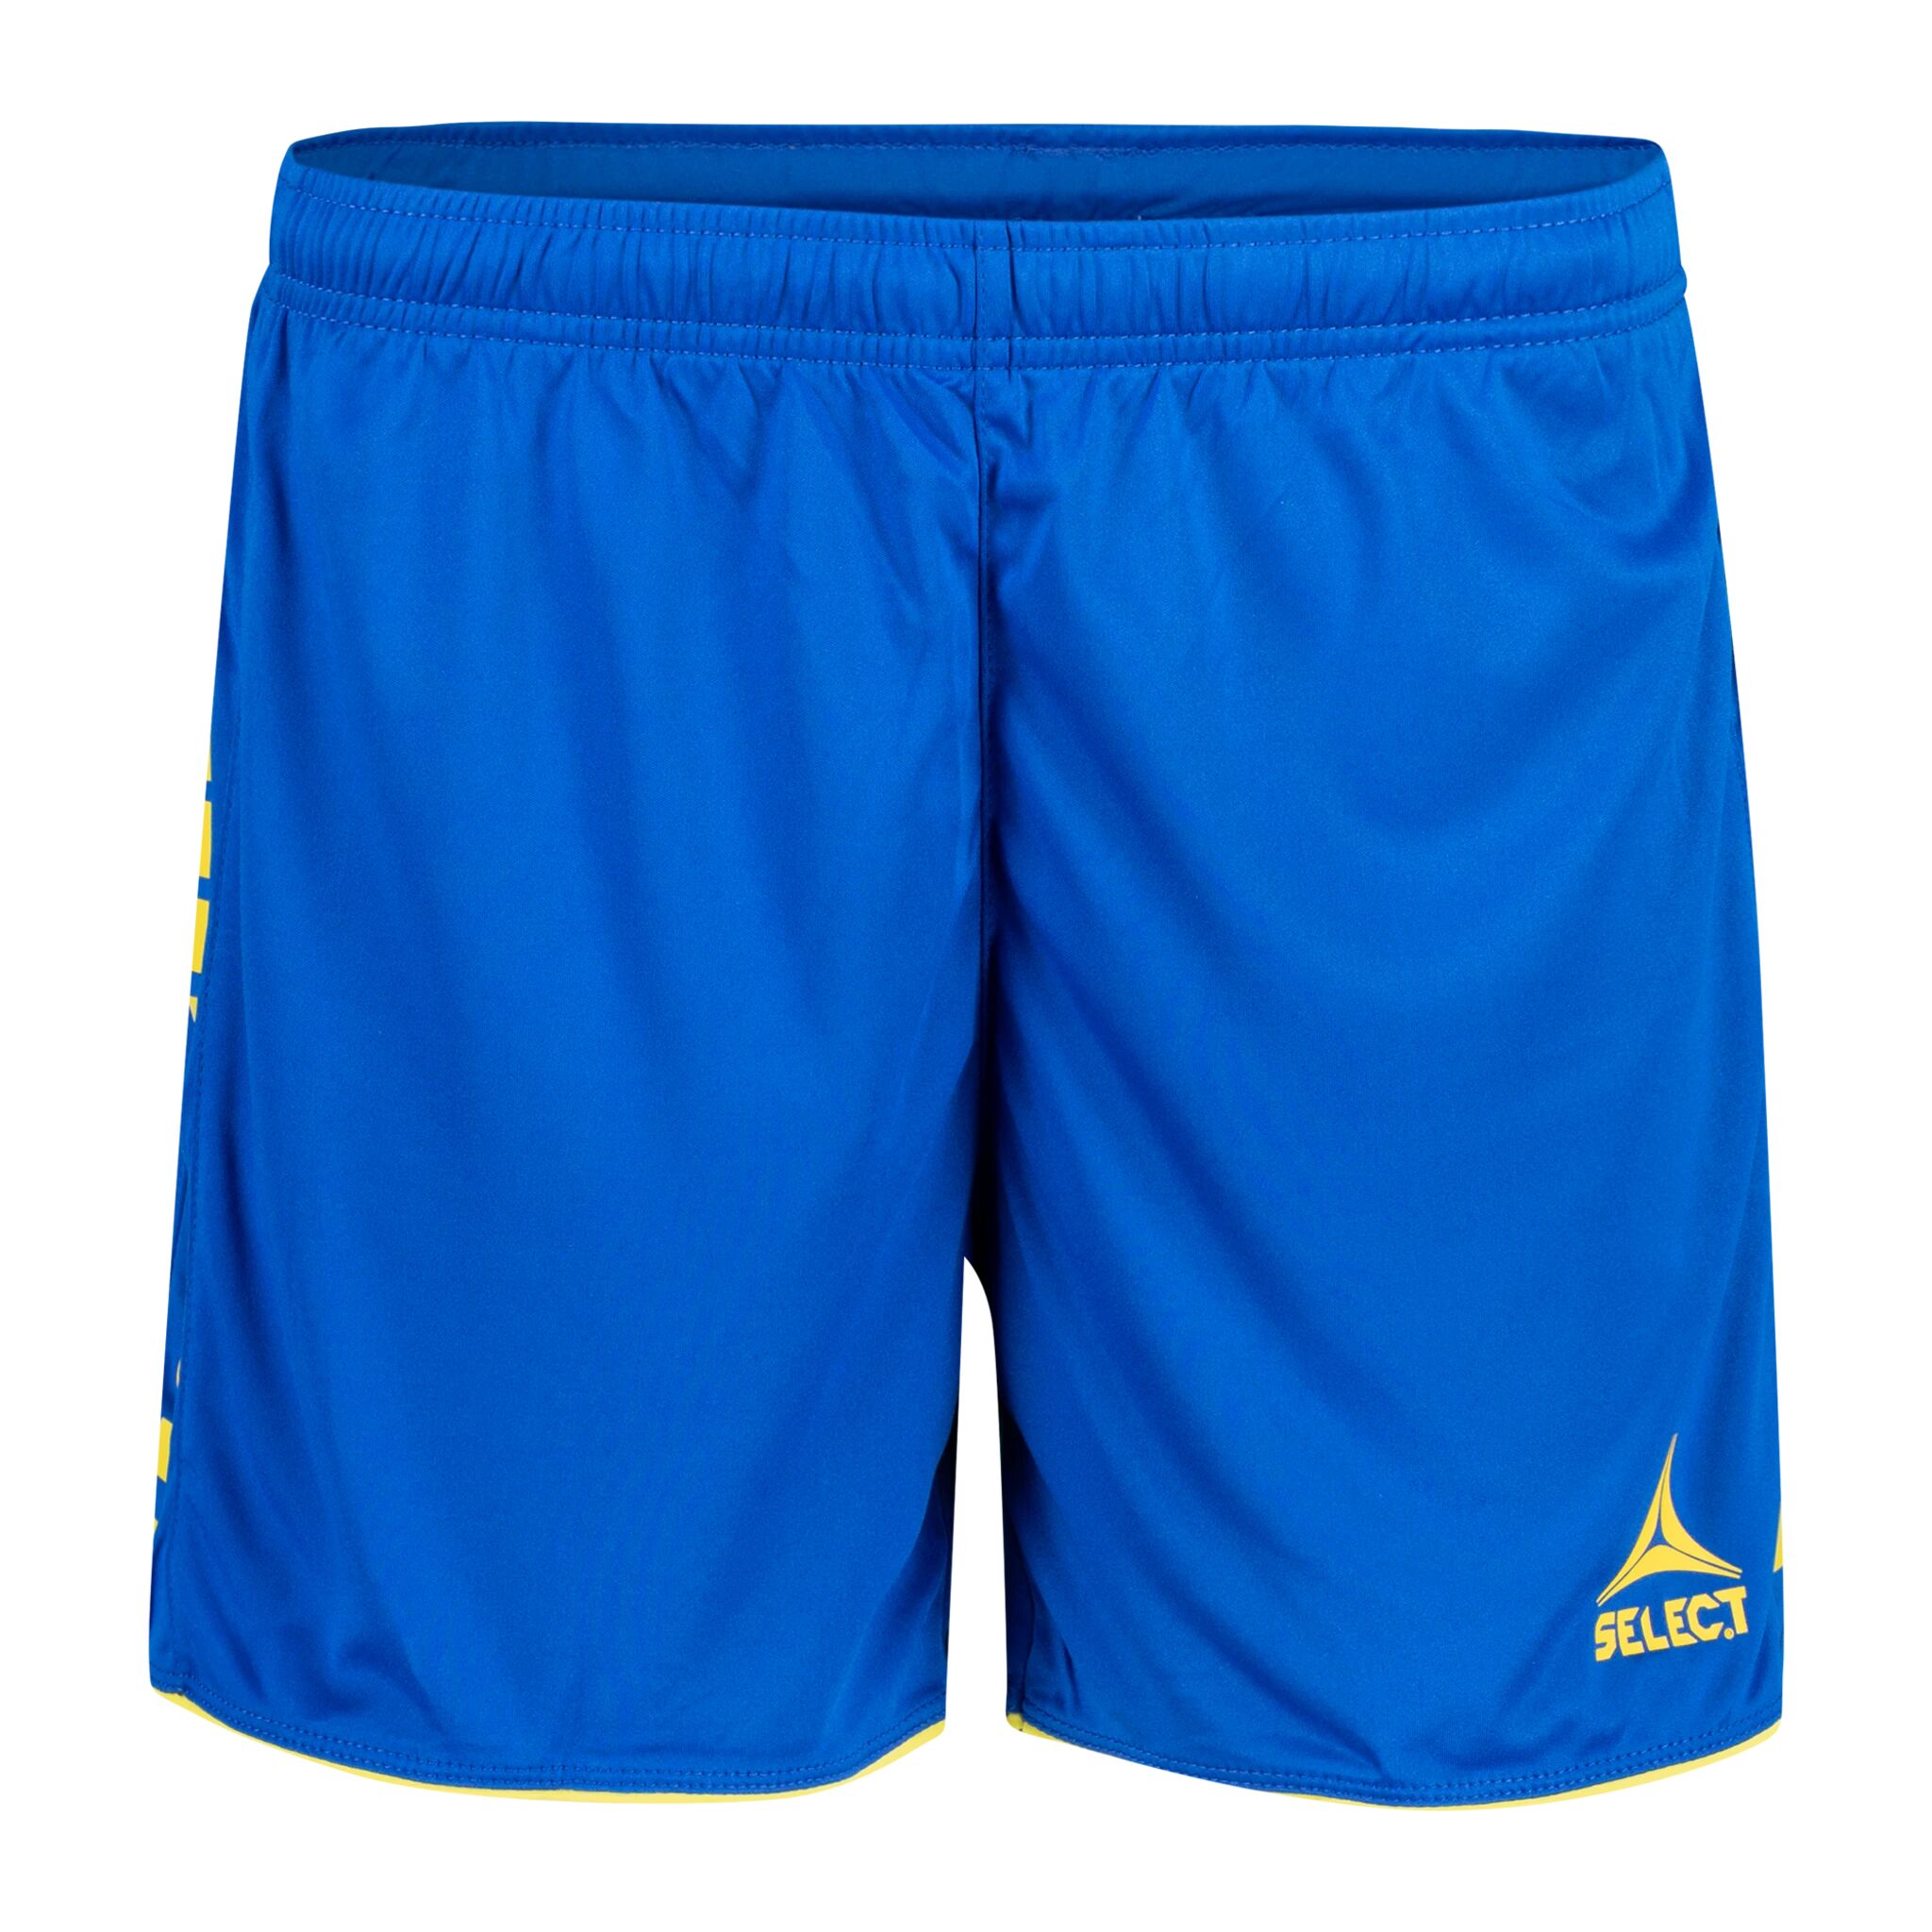 Select Player shorts Argentina, shorts dame XS blue